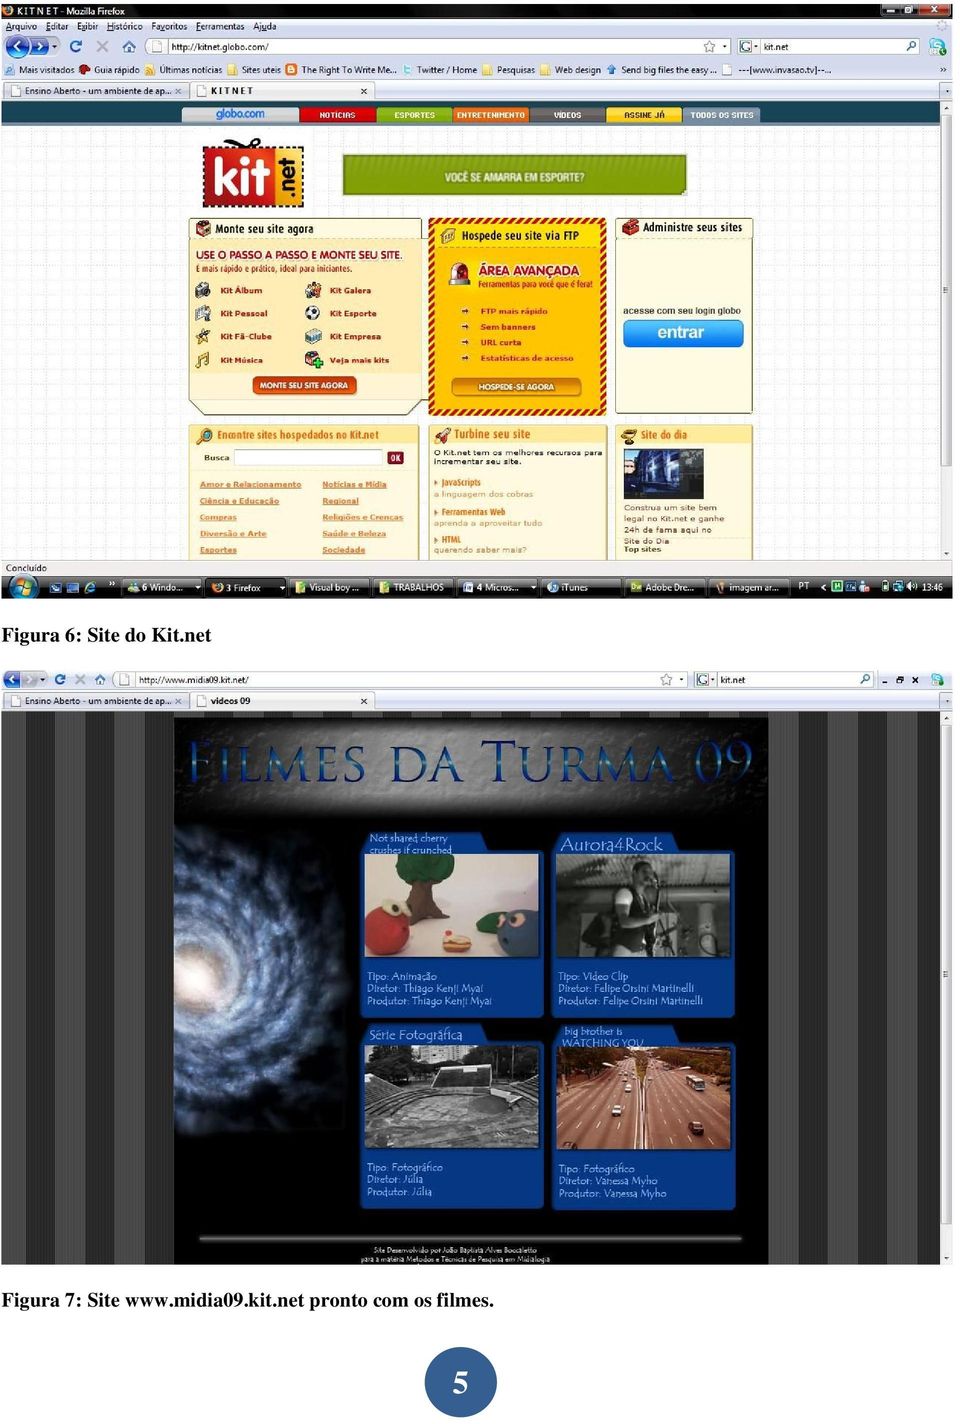 Site www.midia09.kit.